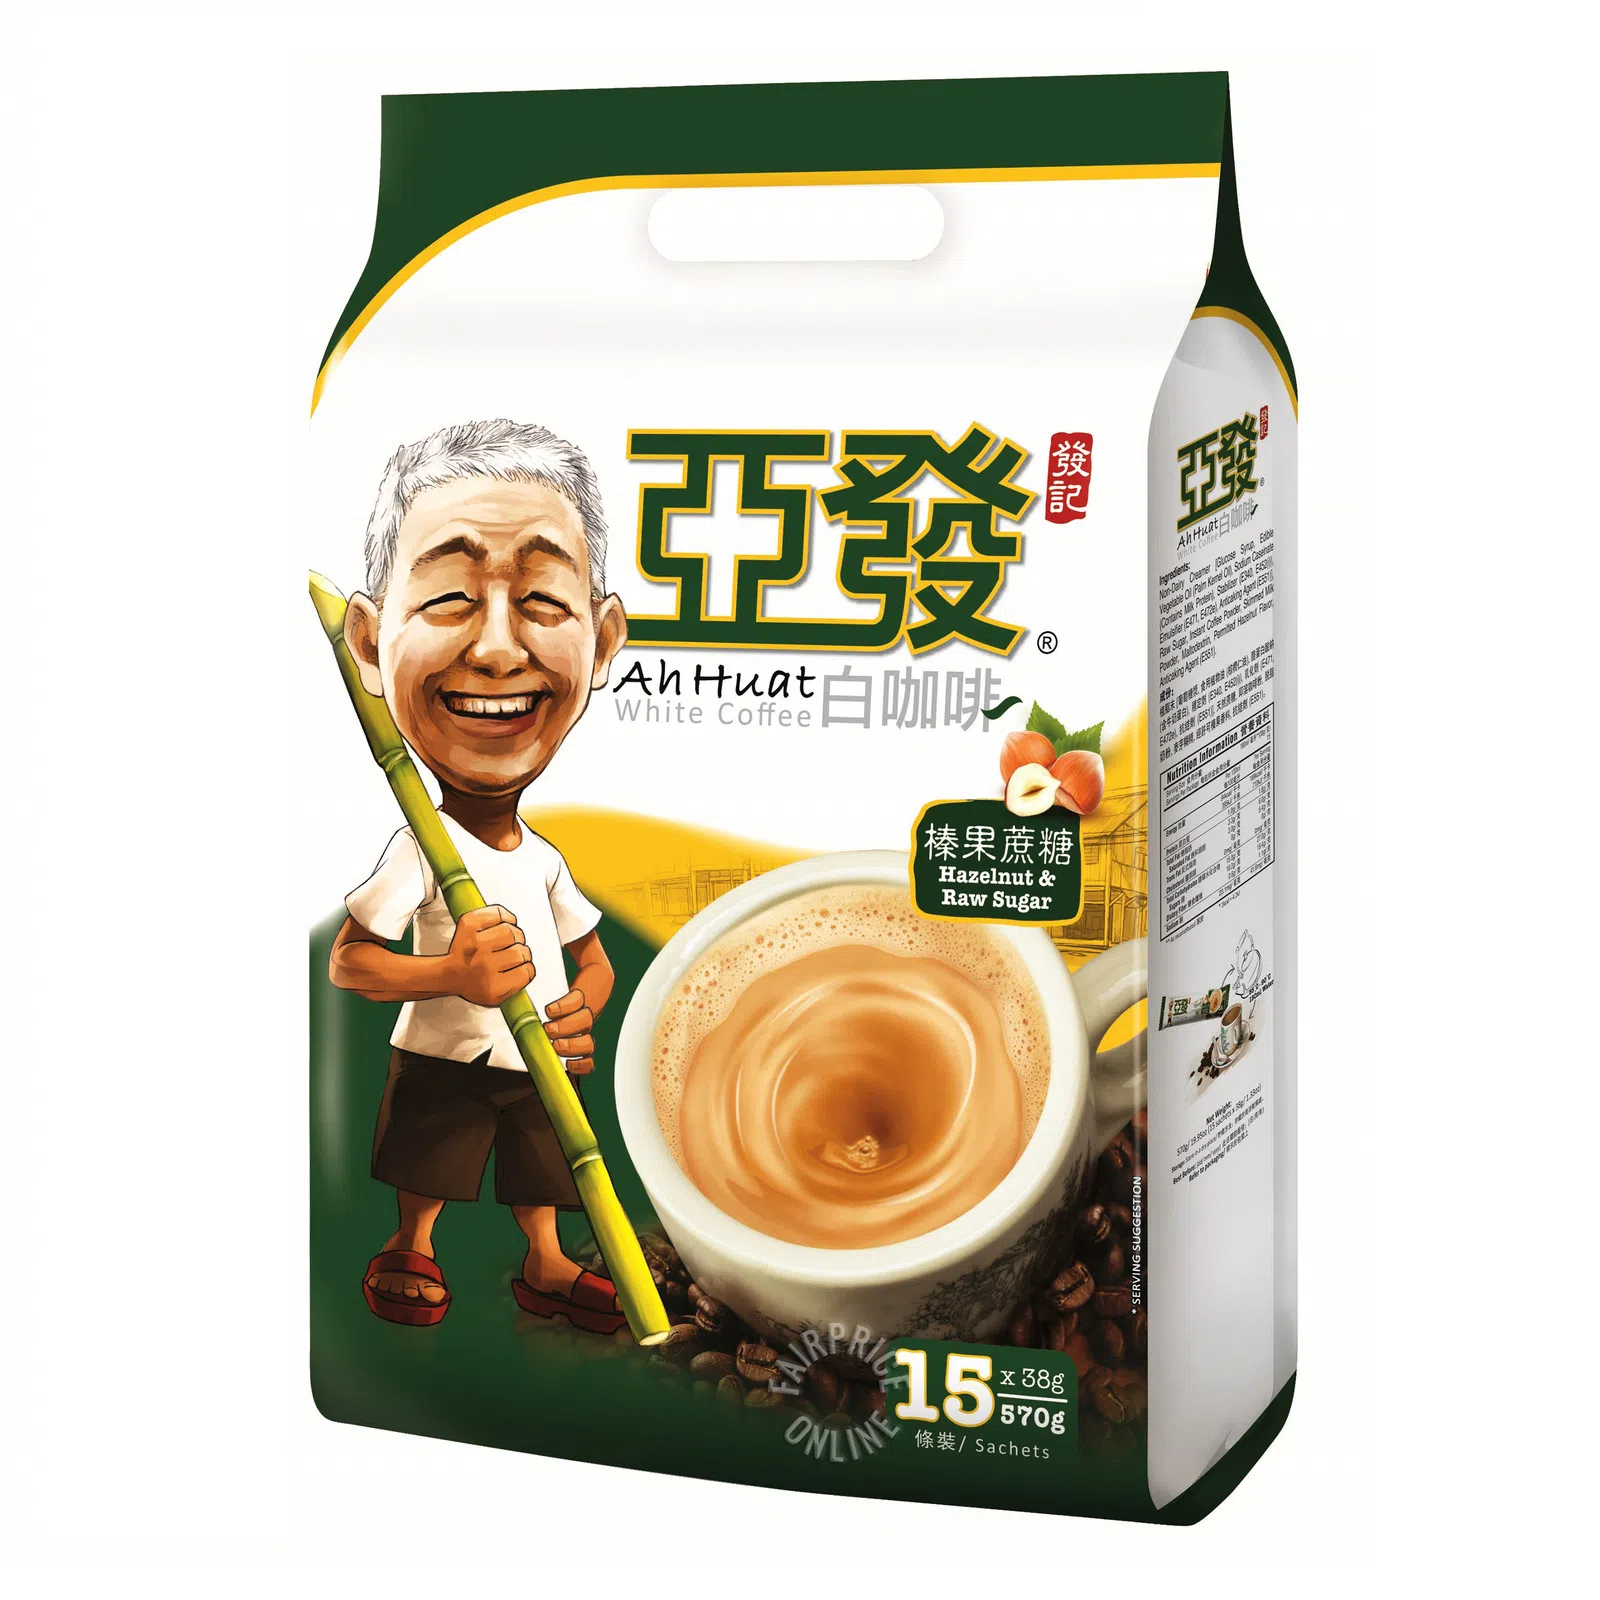 Ah Huat White Coffee – Hazelnut & Raw Sugar 15 x 38g